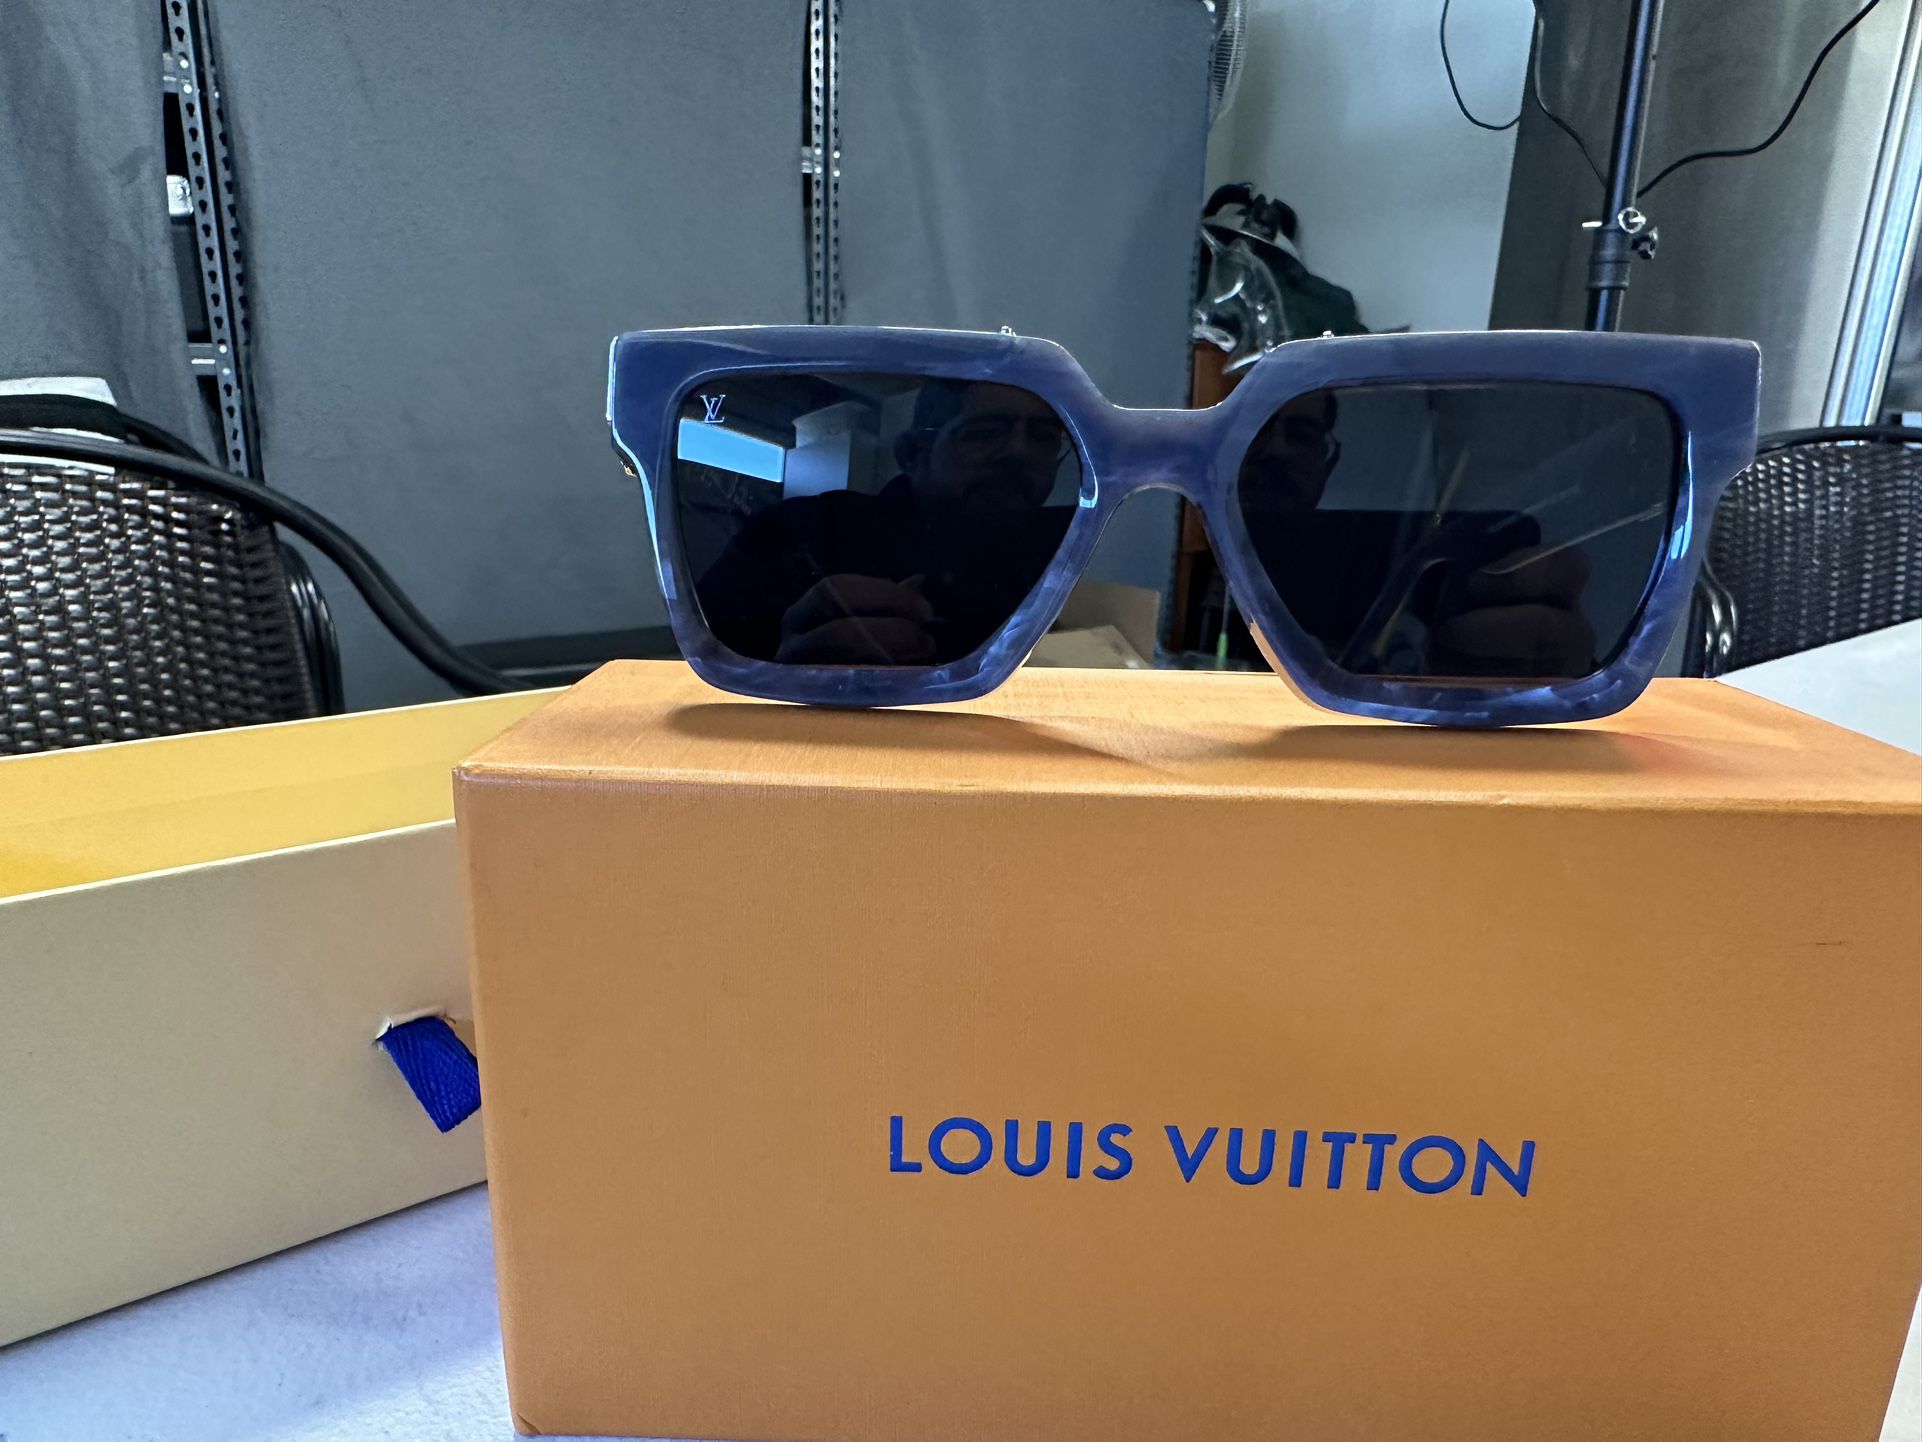 Louis Vuitton 1.1 millionaires sunglasses for Sale in Los Angeles, CA -  OfferUp